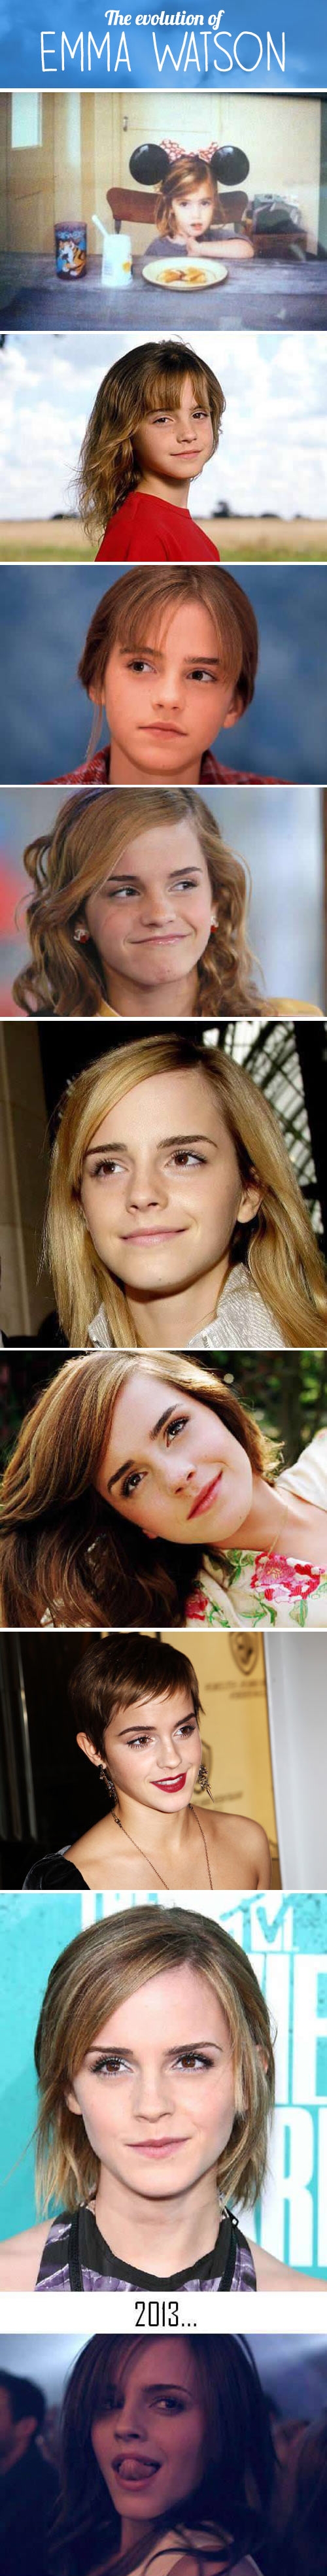 The evolution of Emma Watson